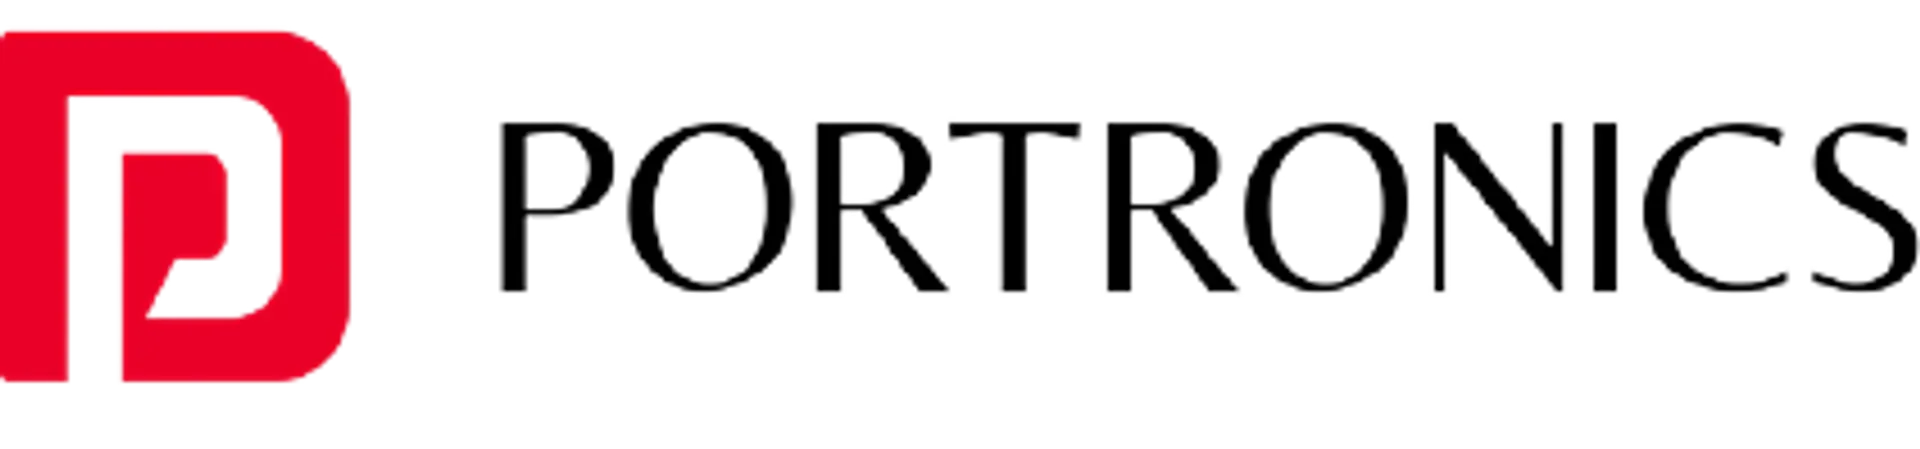 PORTRONICS logo. Current weekly ad